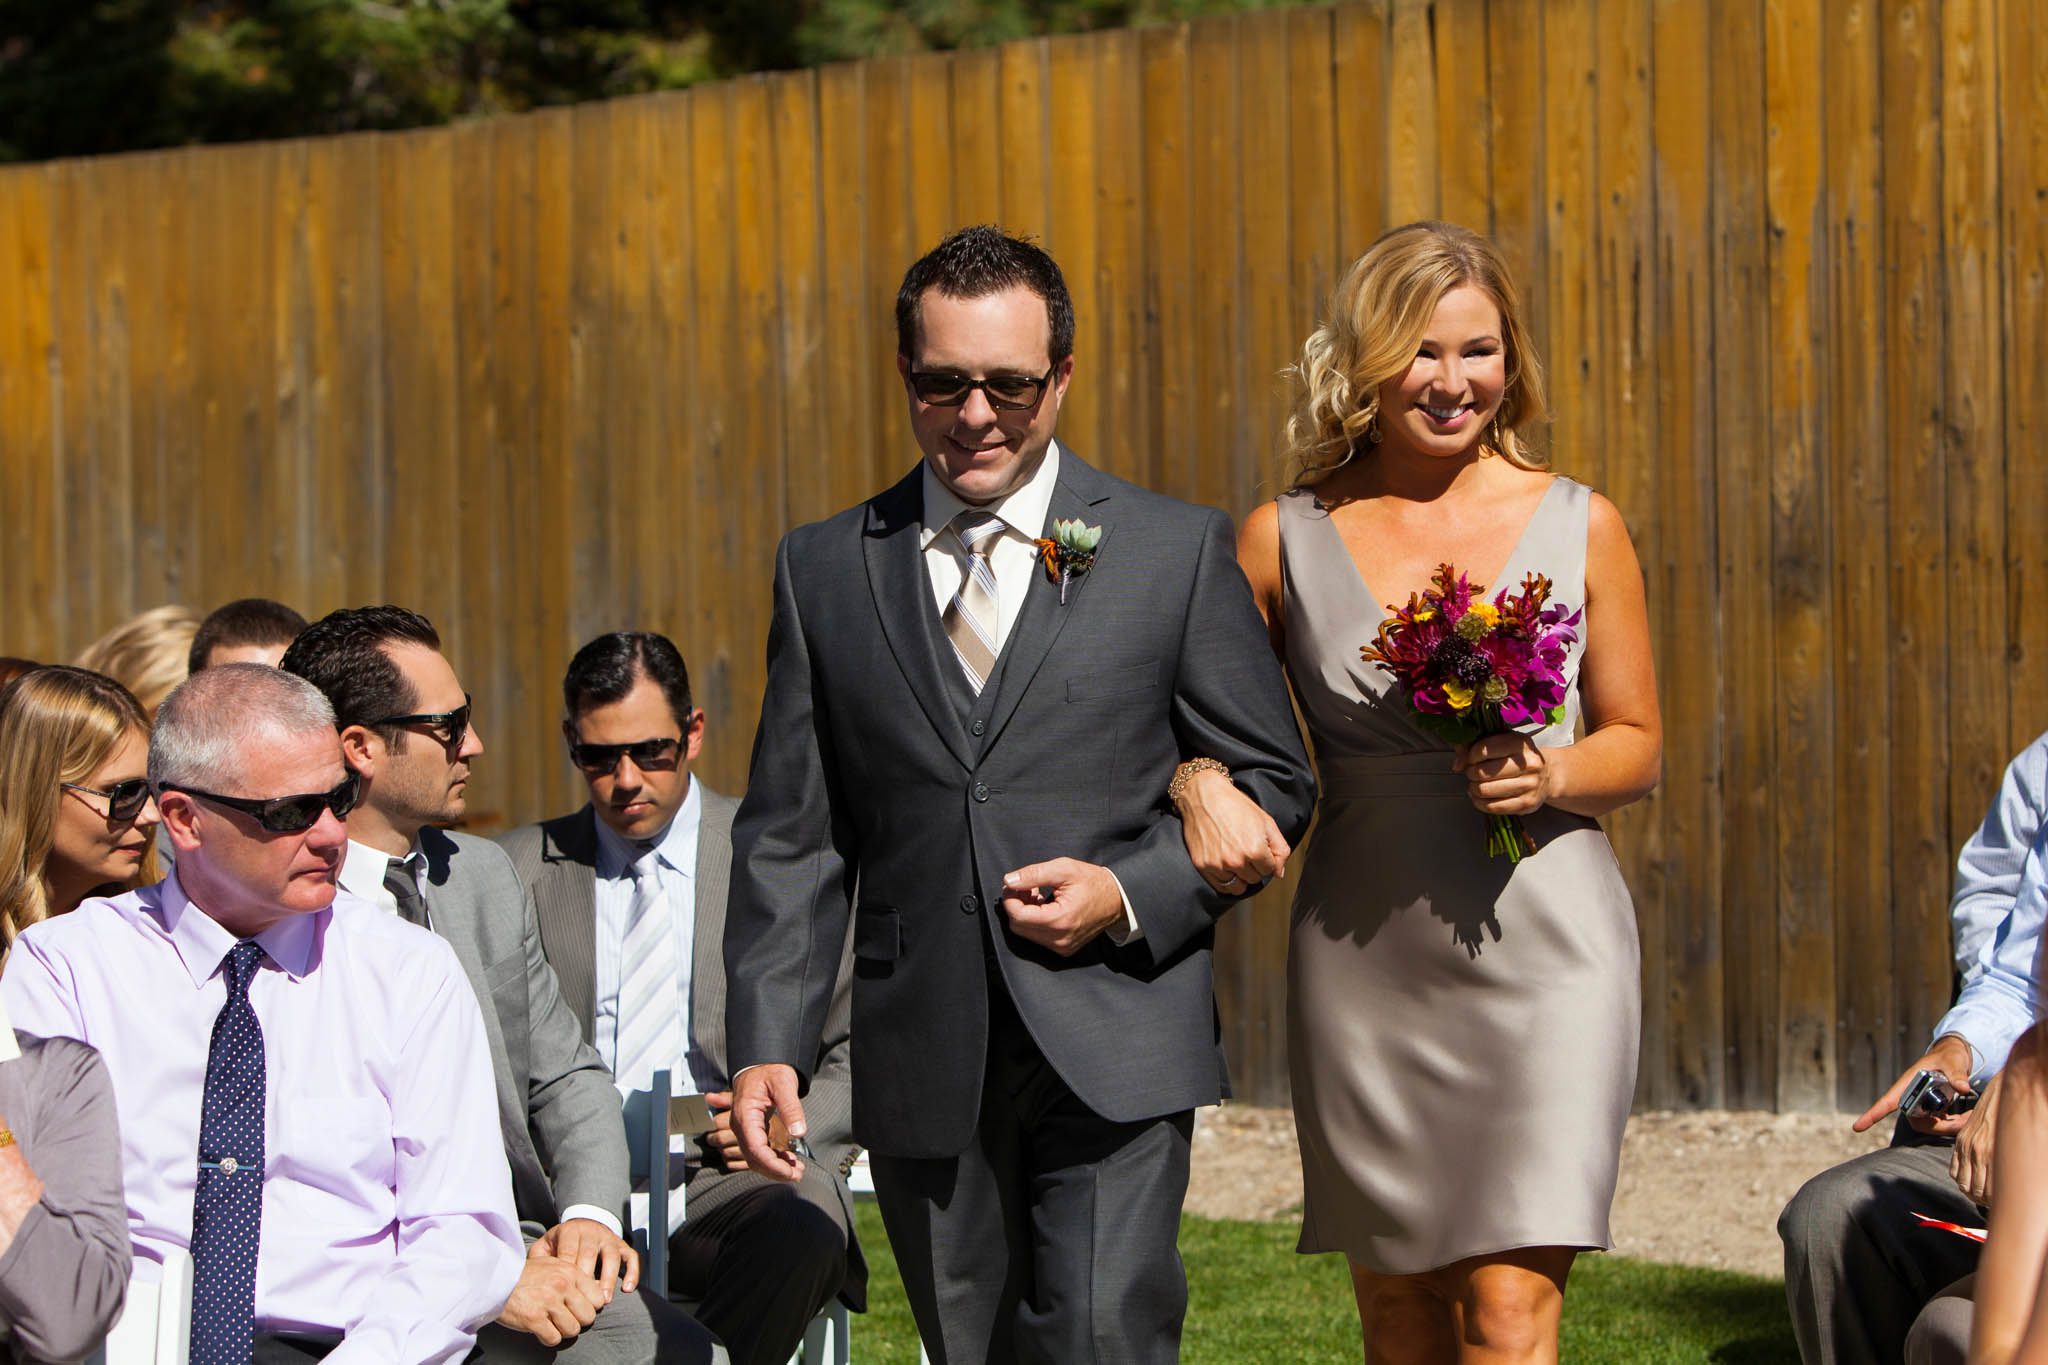 bridesmaid and groomsman walking down aisle – North Lake Tahoe Incline Village wedding photography